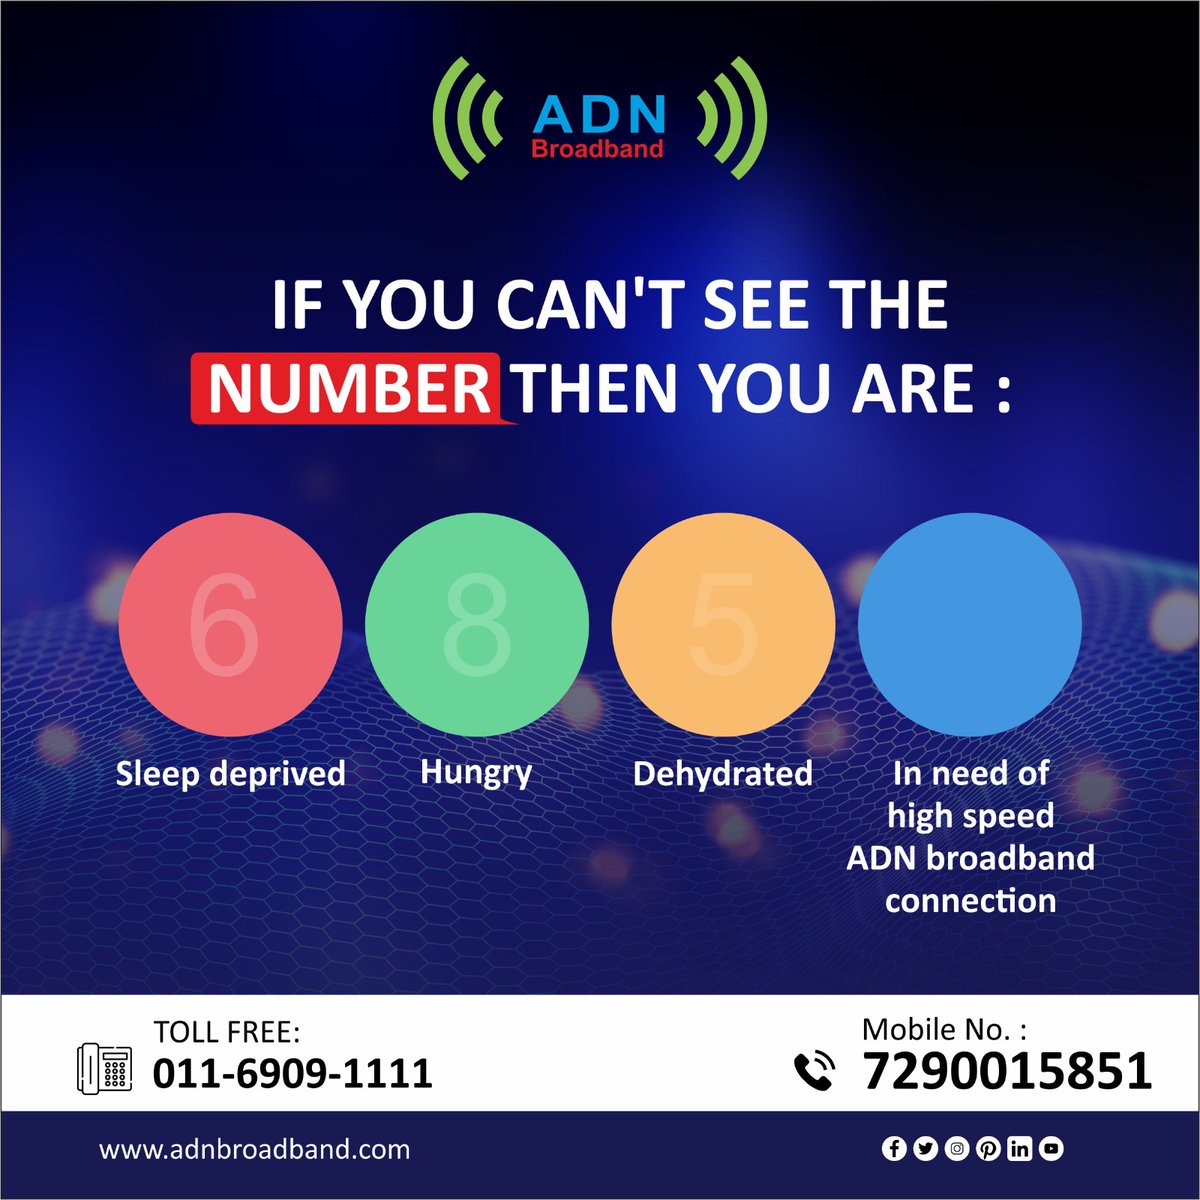 You already know what to do next, and we are ready! 😎

#adn #adnbroadband #highspeed #highspeedinternet #broadband #delhi #noida #faridabad #delhincr #internetserviceprovider #InternetSpeed #InternetProviders